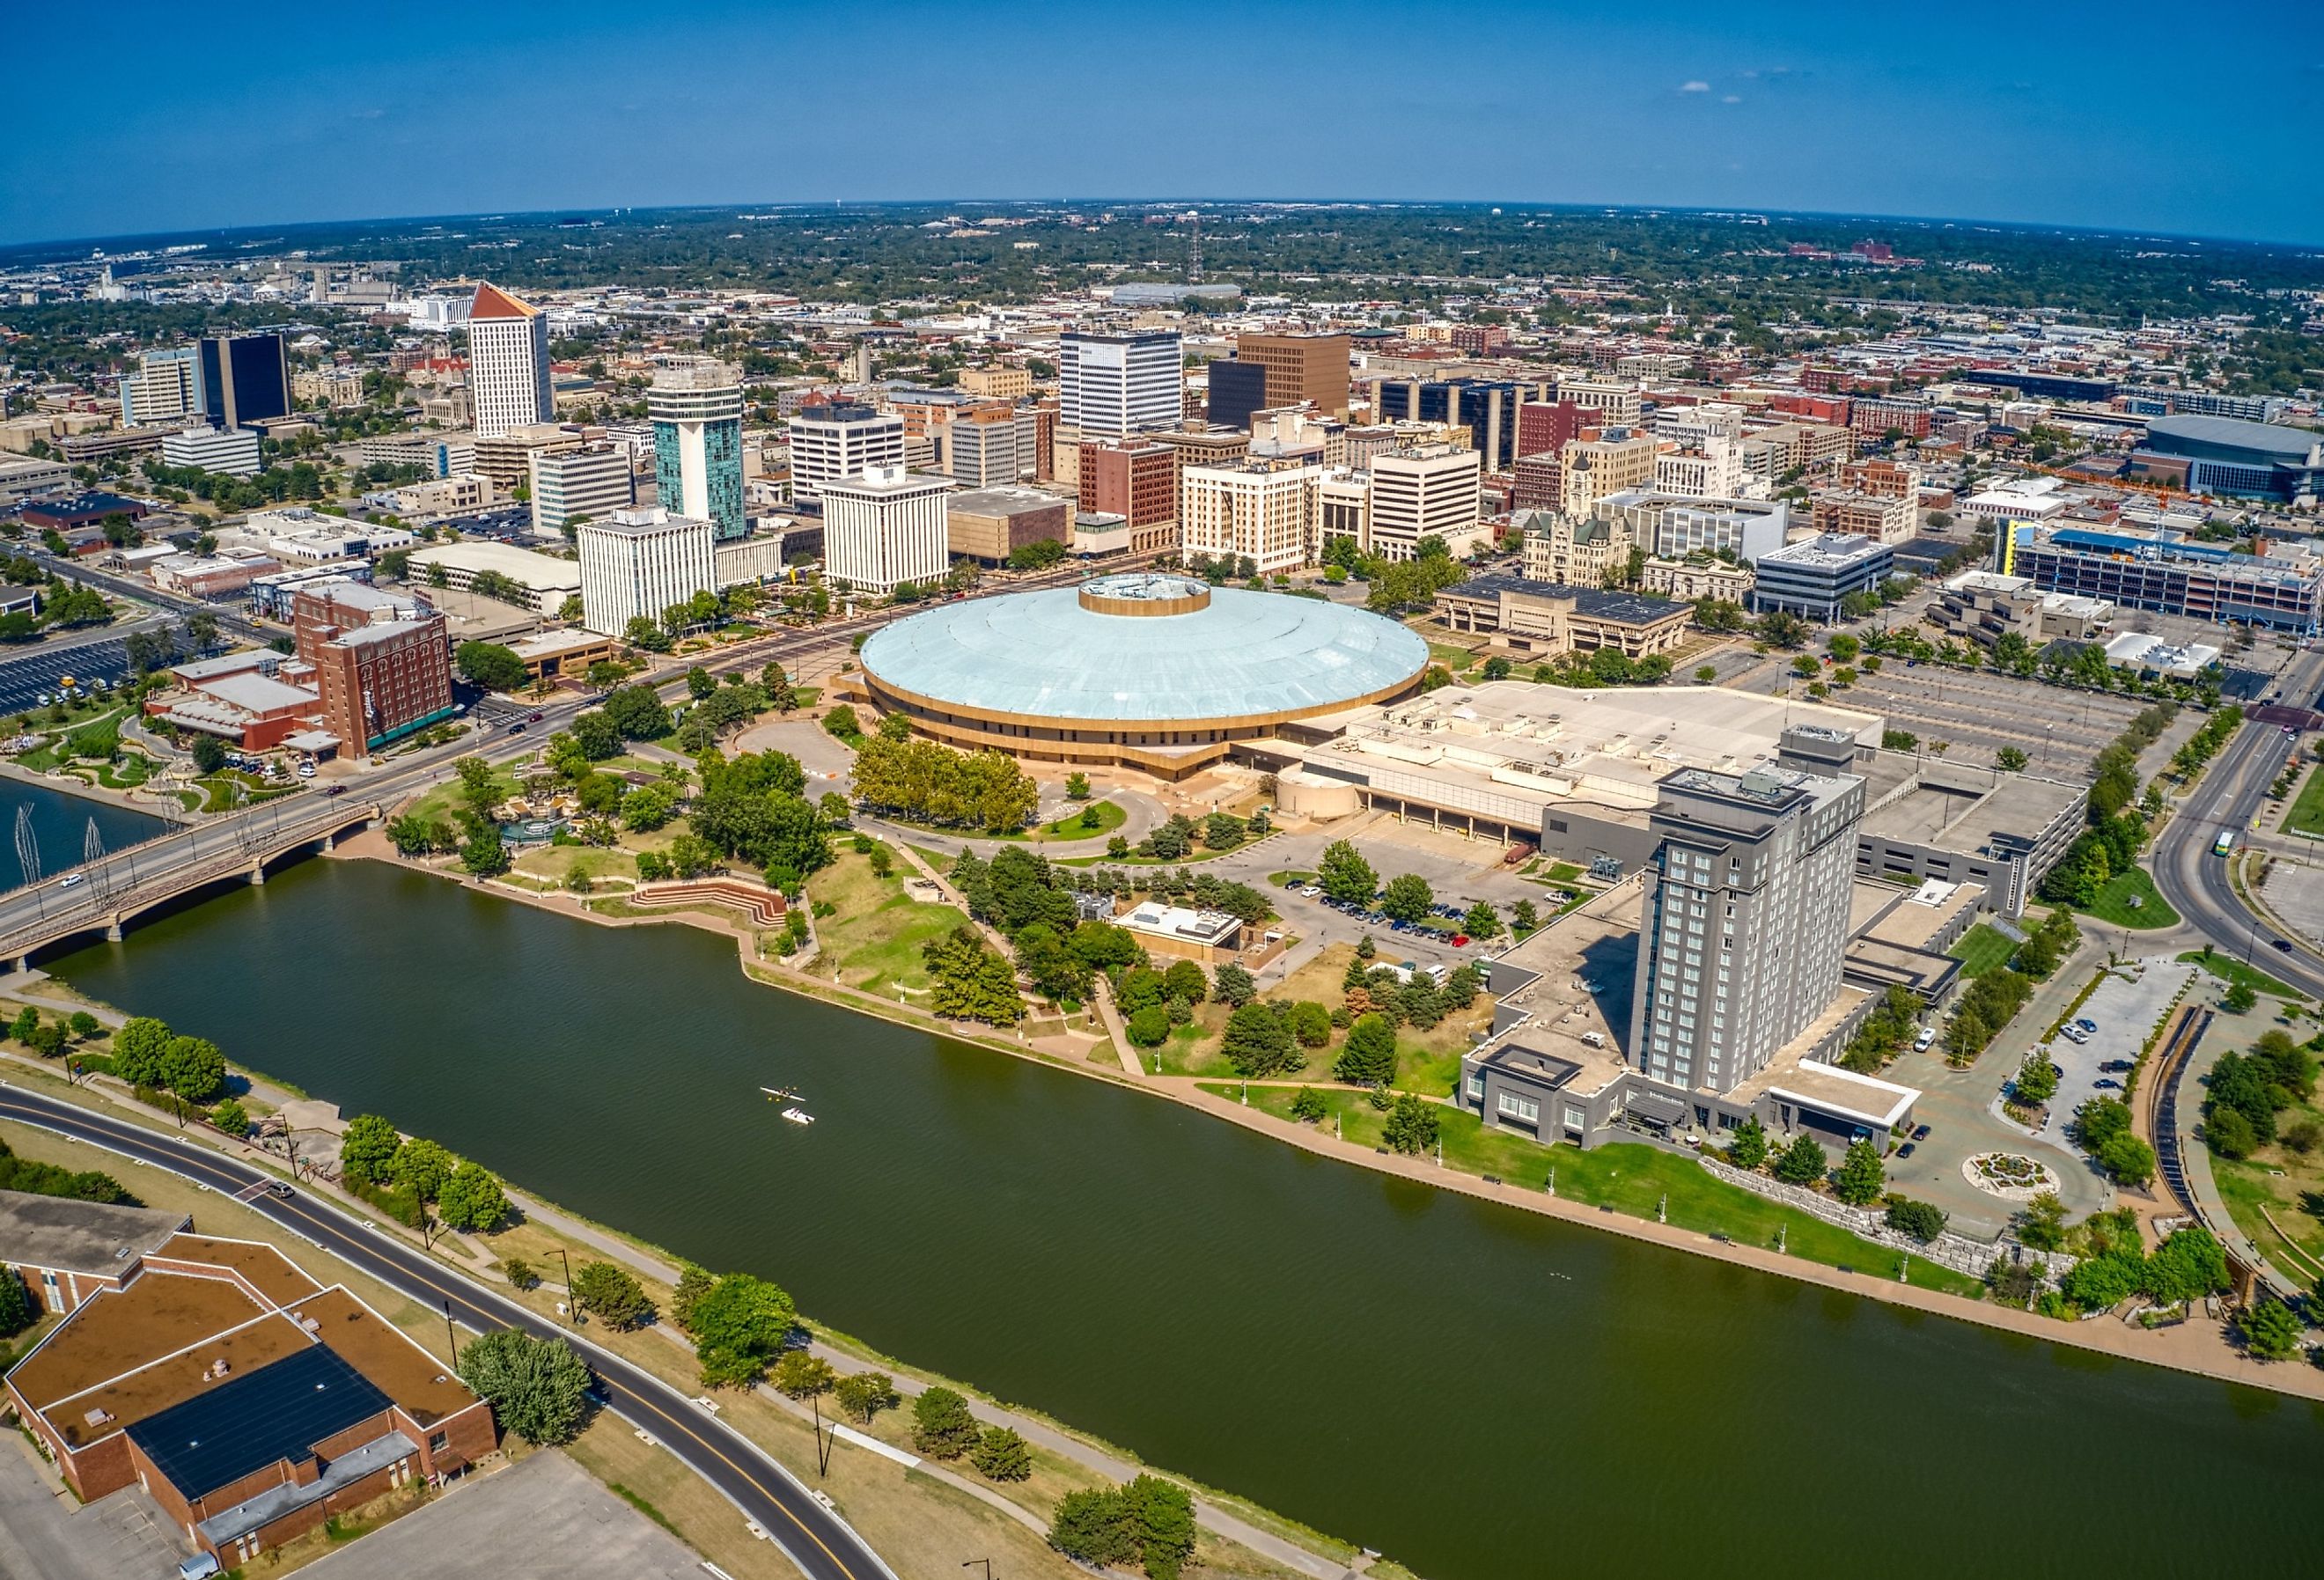 Aerial view of the downtown of Wichita, Kansas.